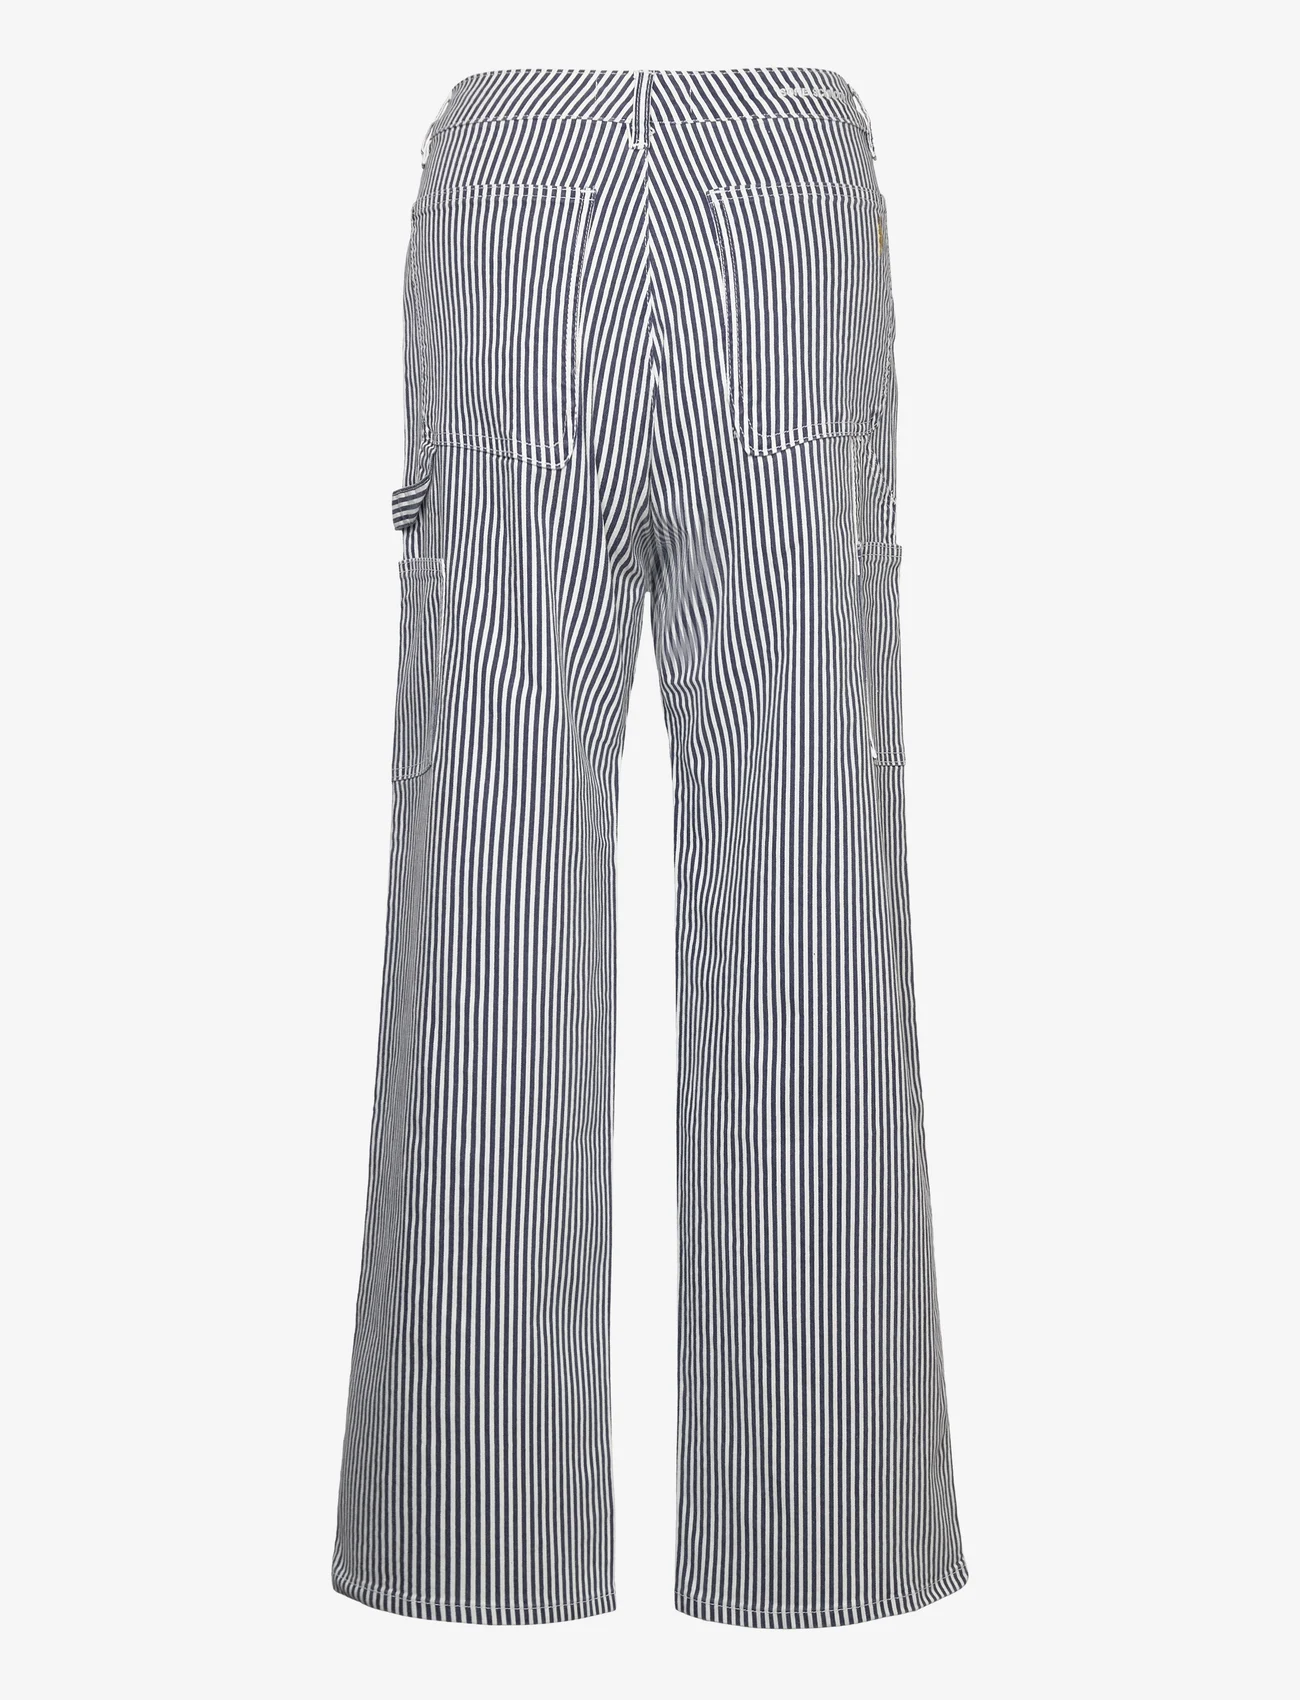 Sofie Schnoor - Trousers - spodnie cargo - dark blue striped - 1